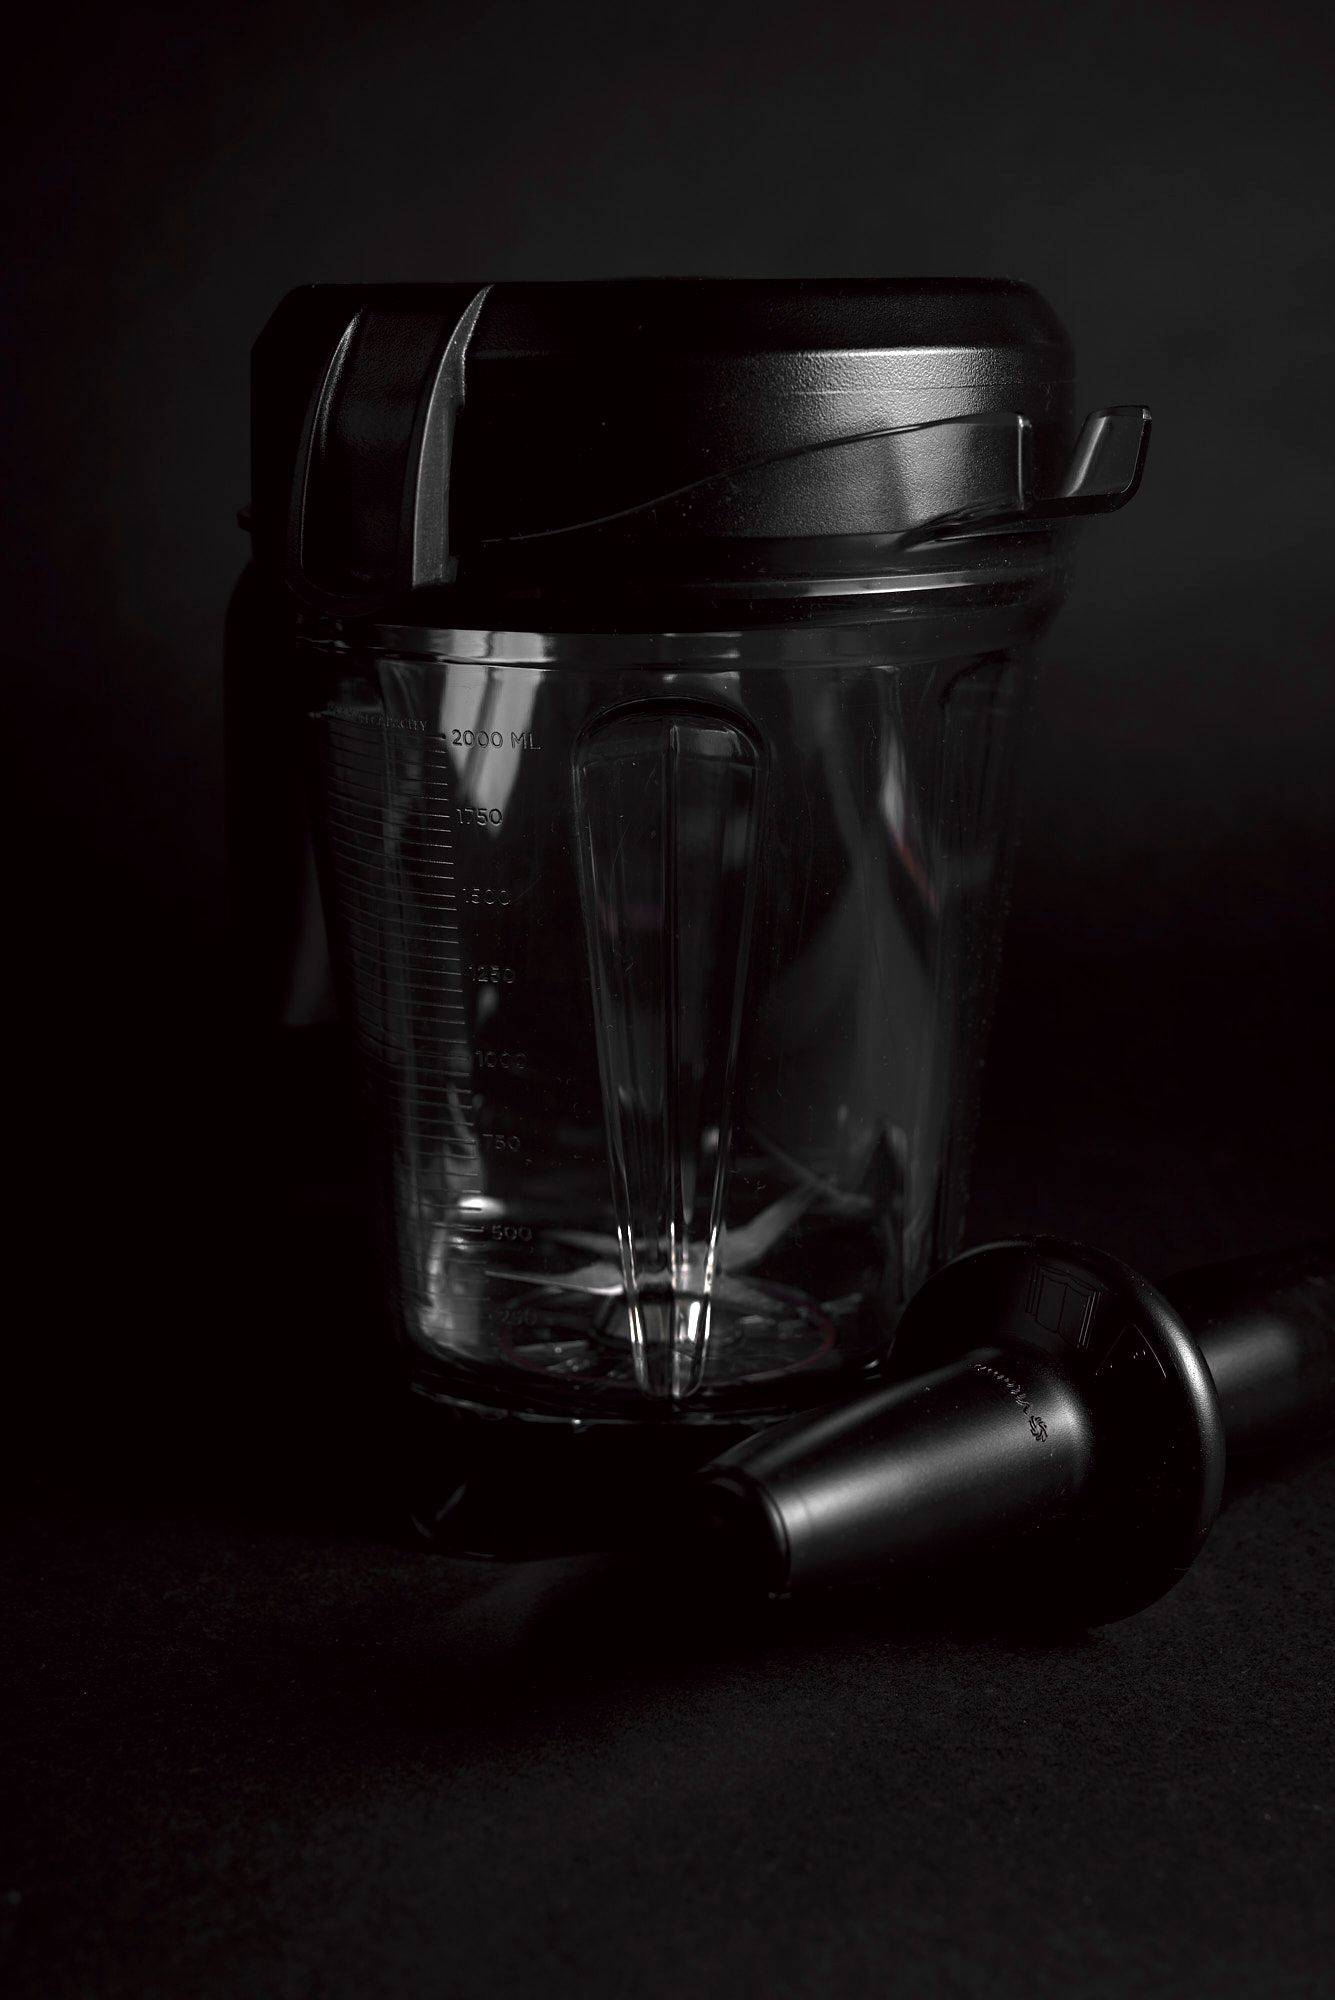 vitamix professional series 750 kitchen blender on black background